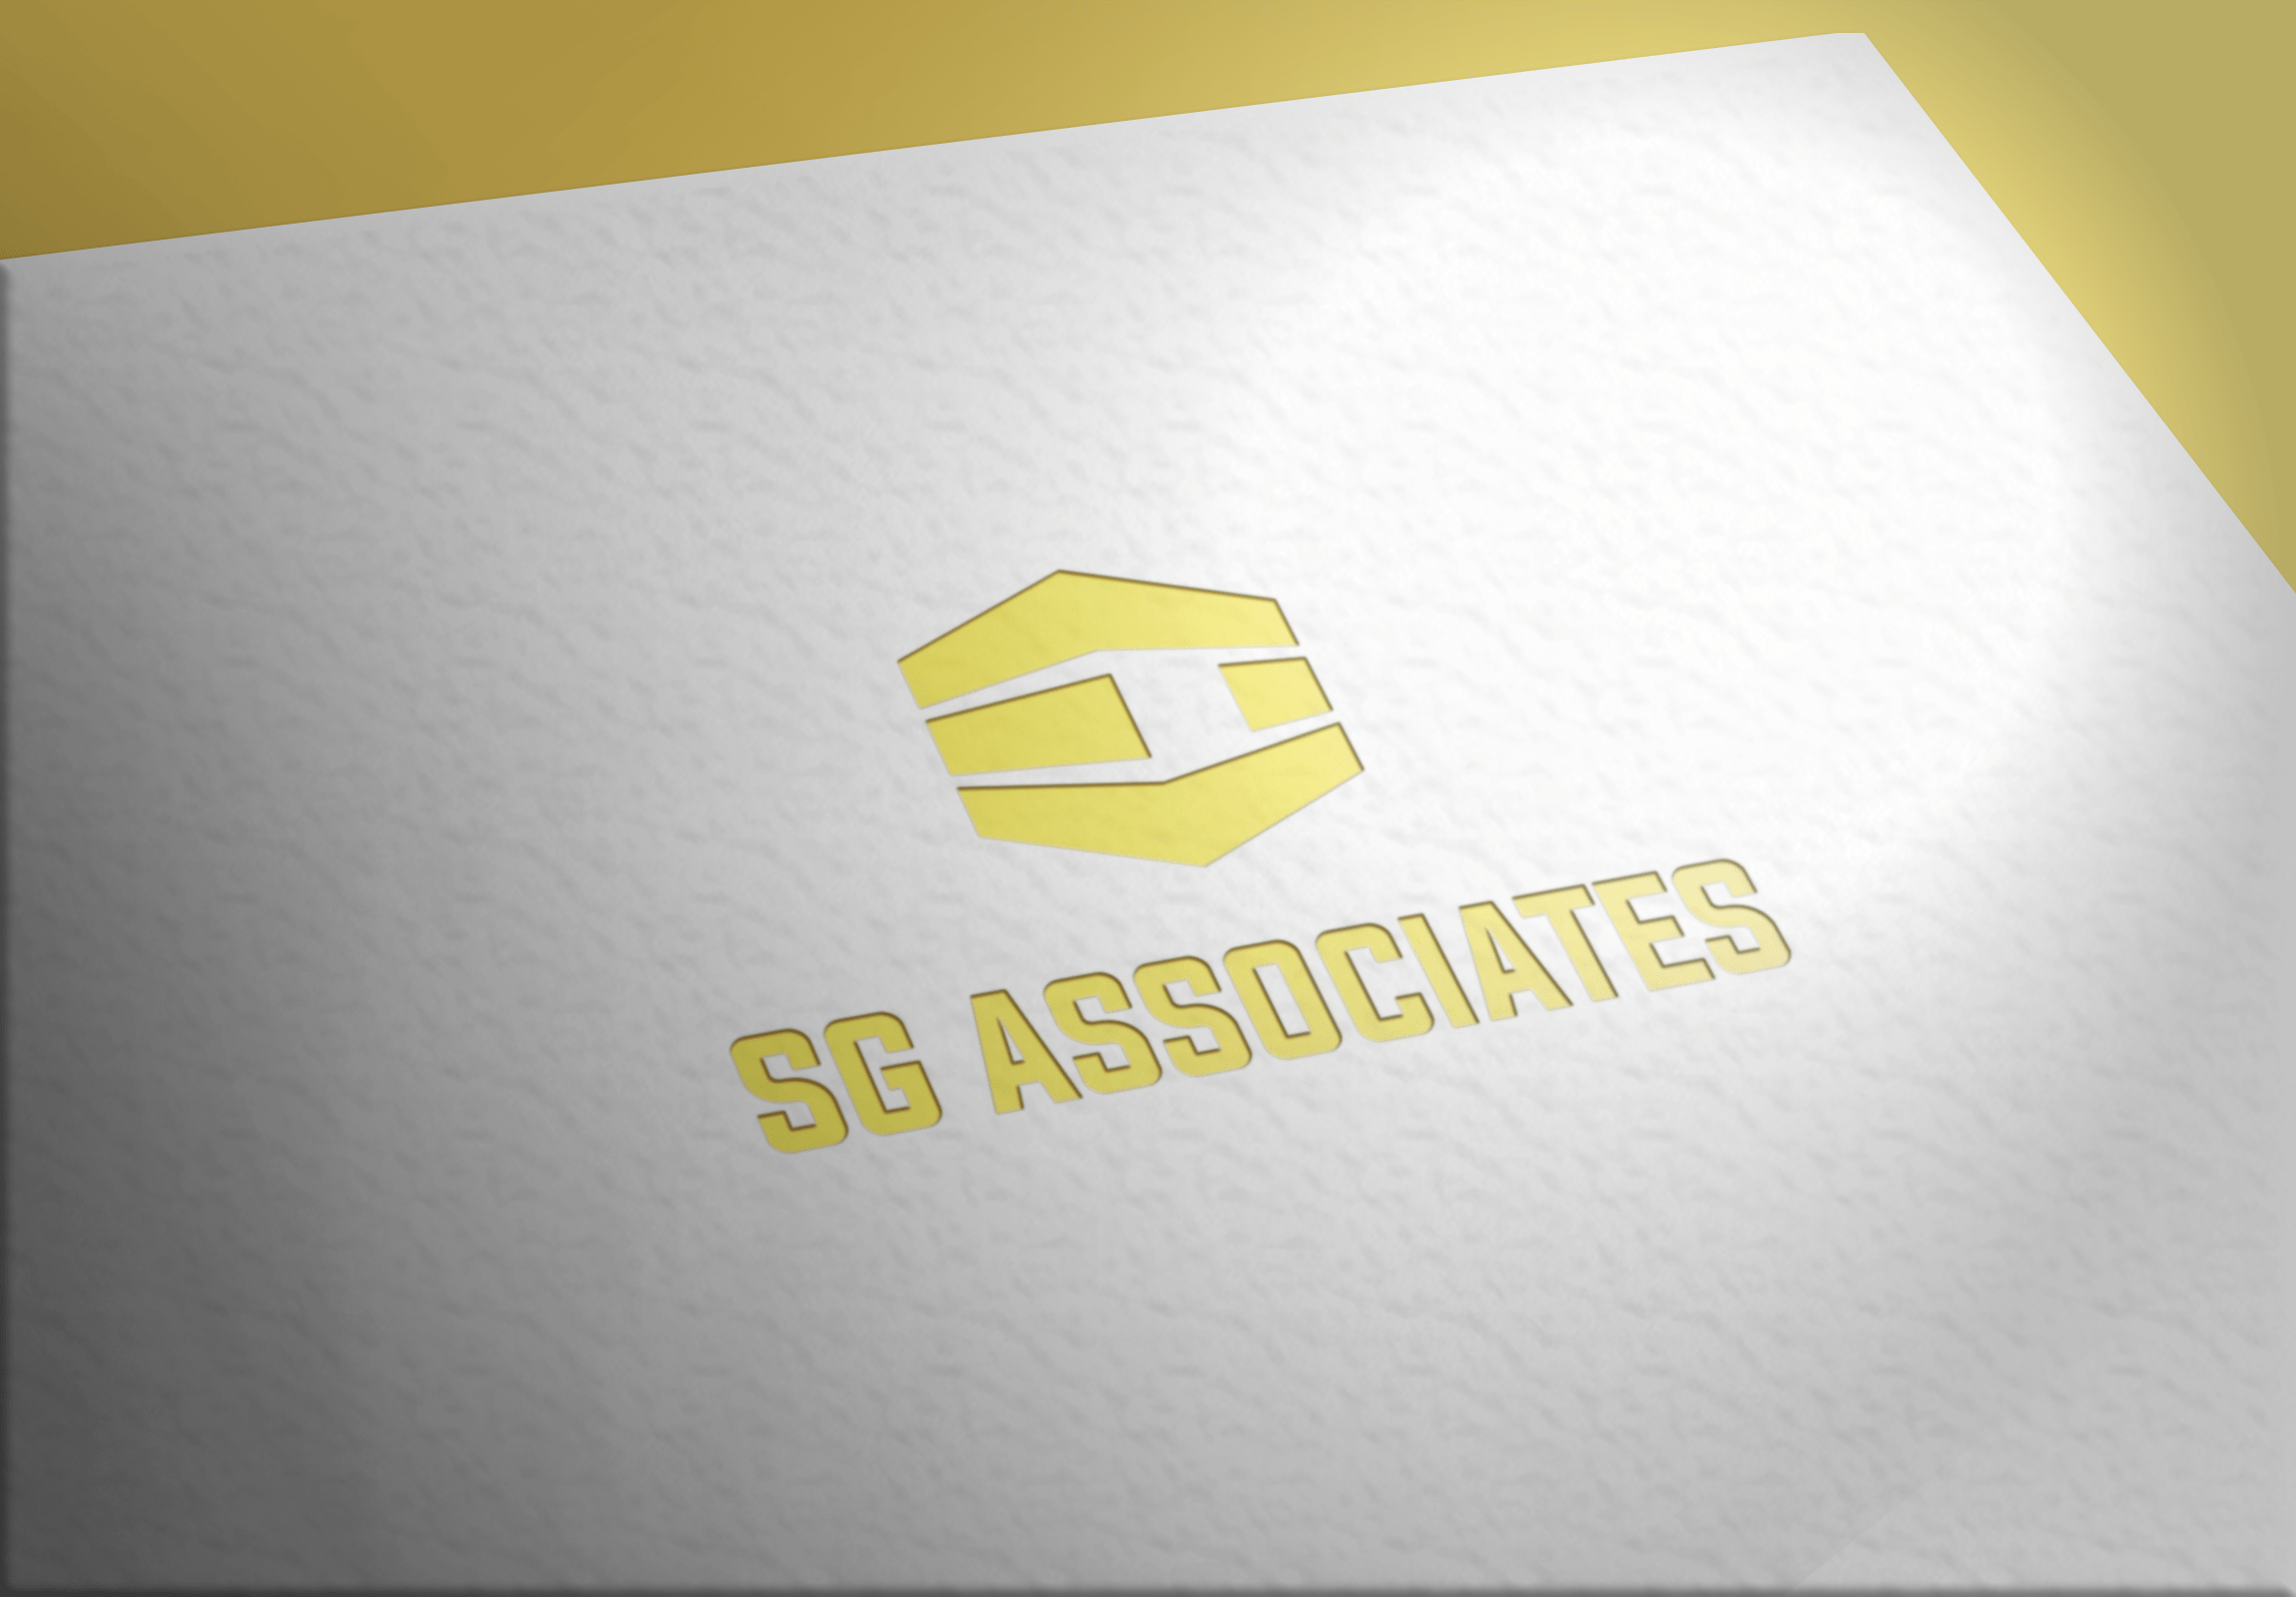 SG Associates